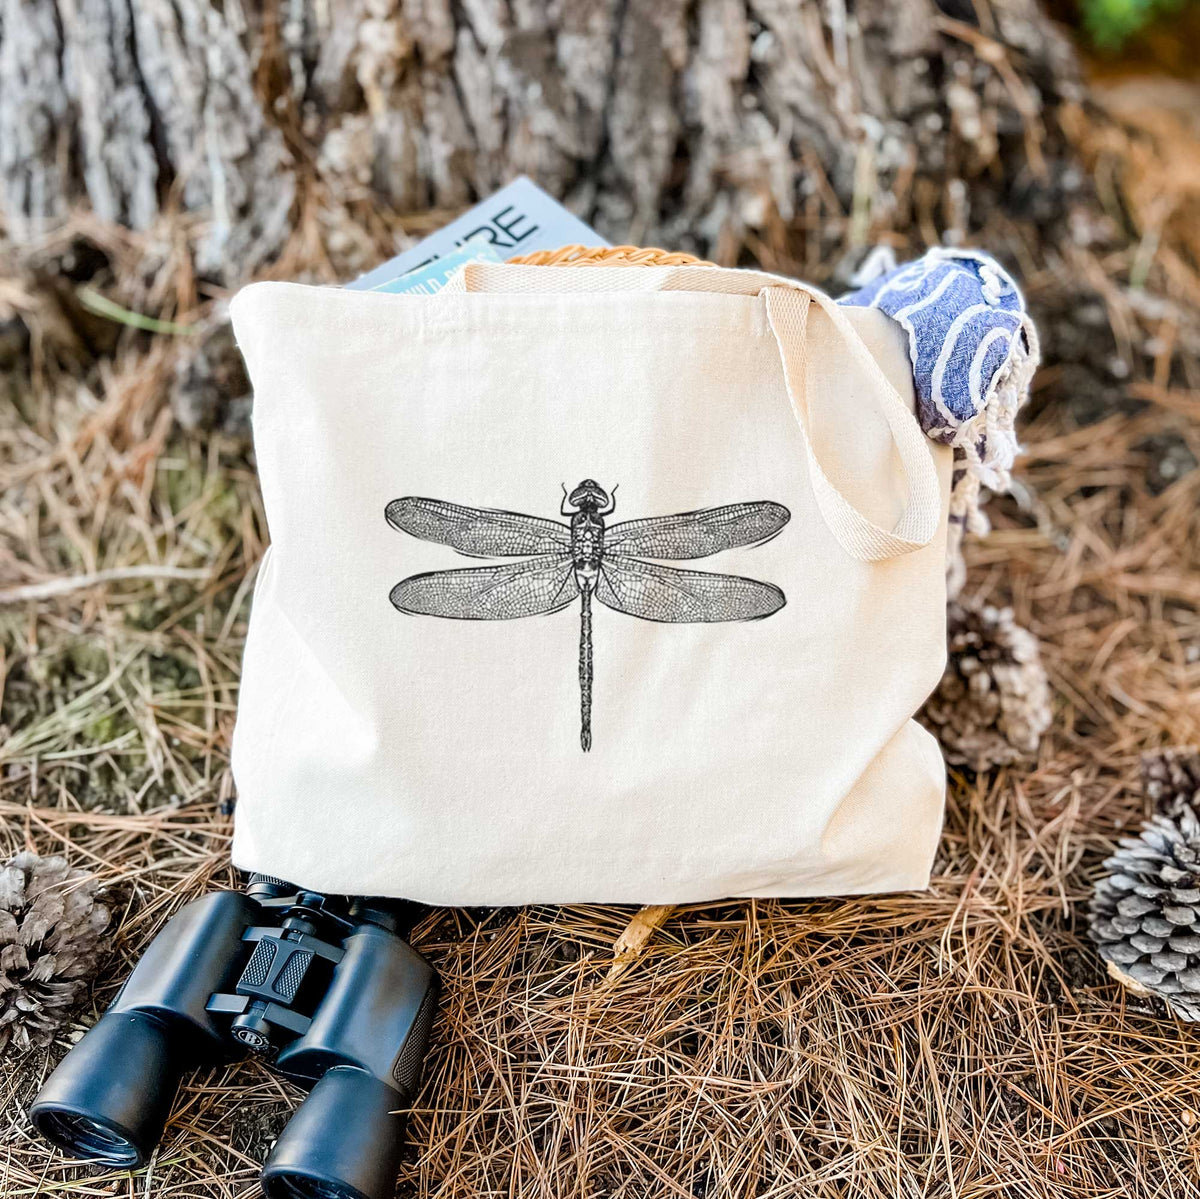 Anax Junius - Green Darner Dragonfly - Tote Bag